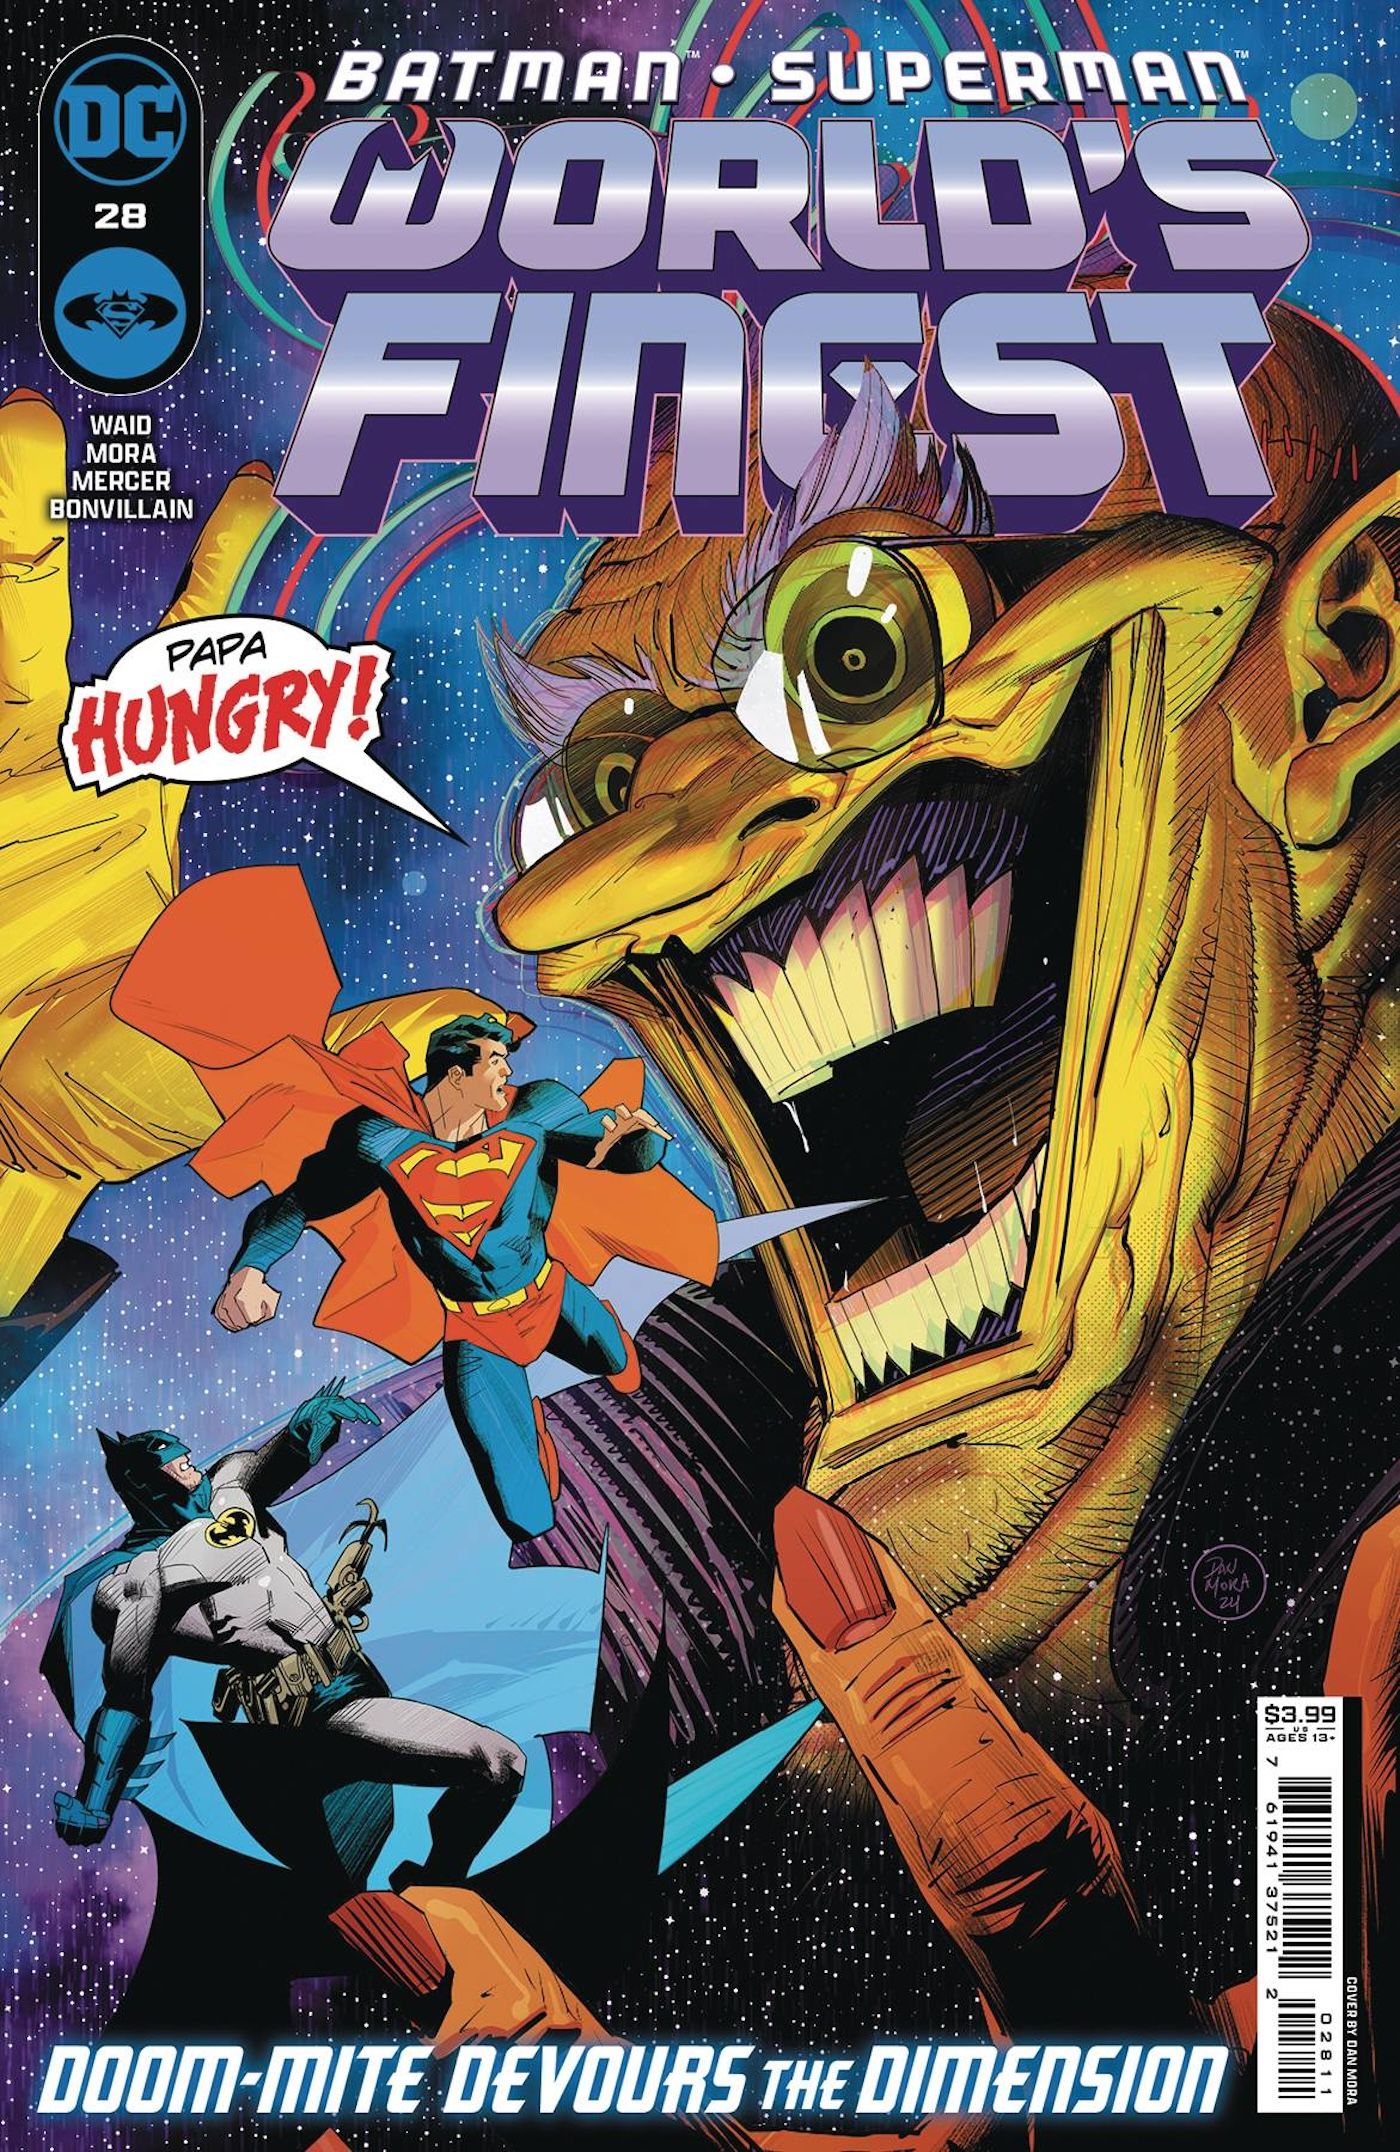 Batman Superman World's Finest 28 Main Cover: Batman and Superman face a large yellow villain, Doom-Mite.